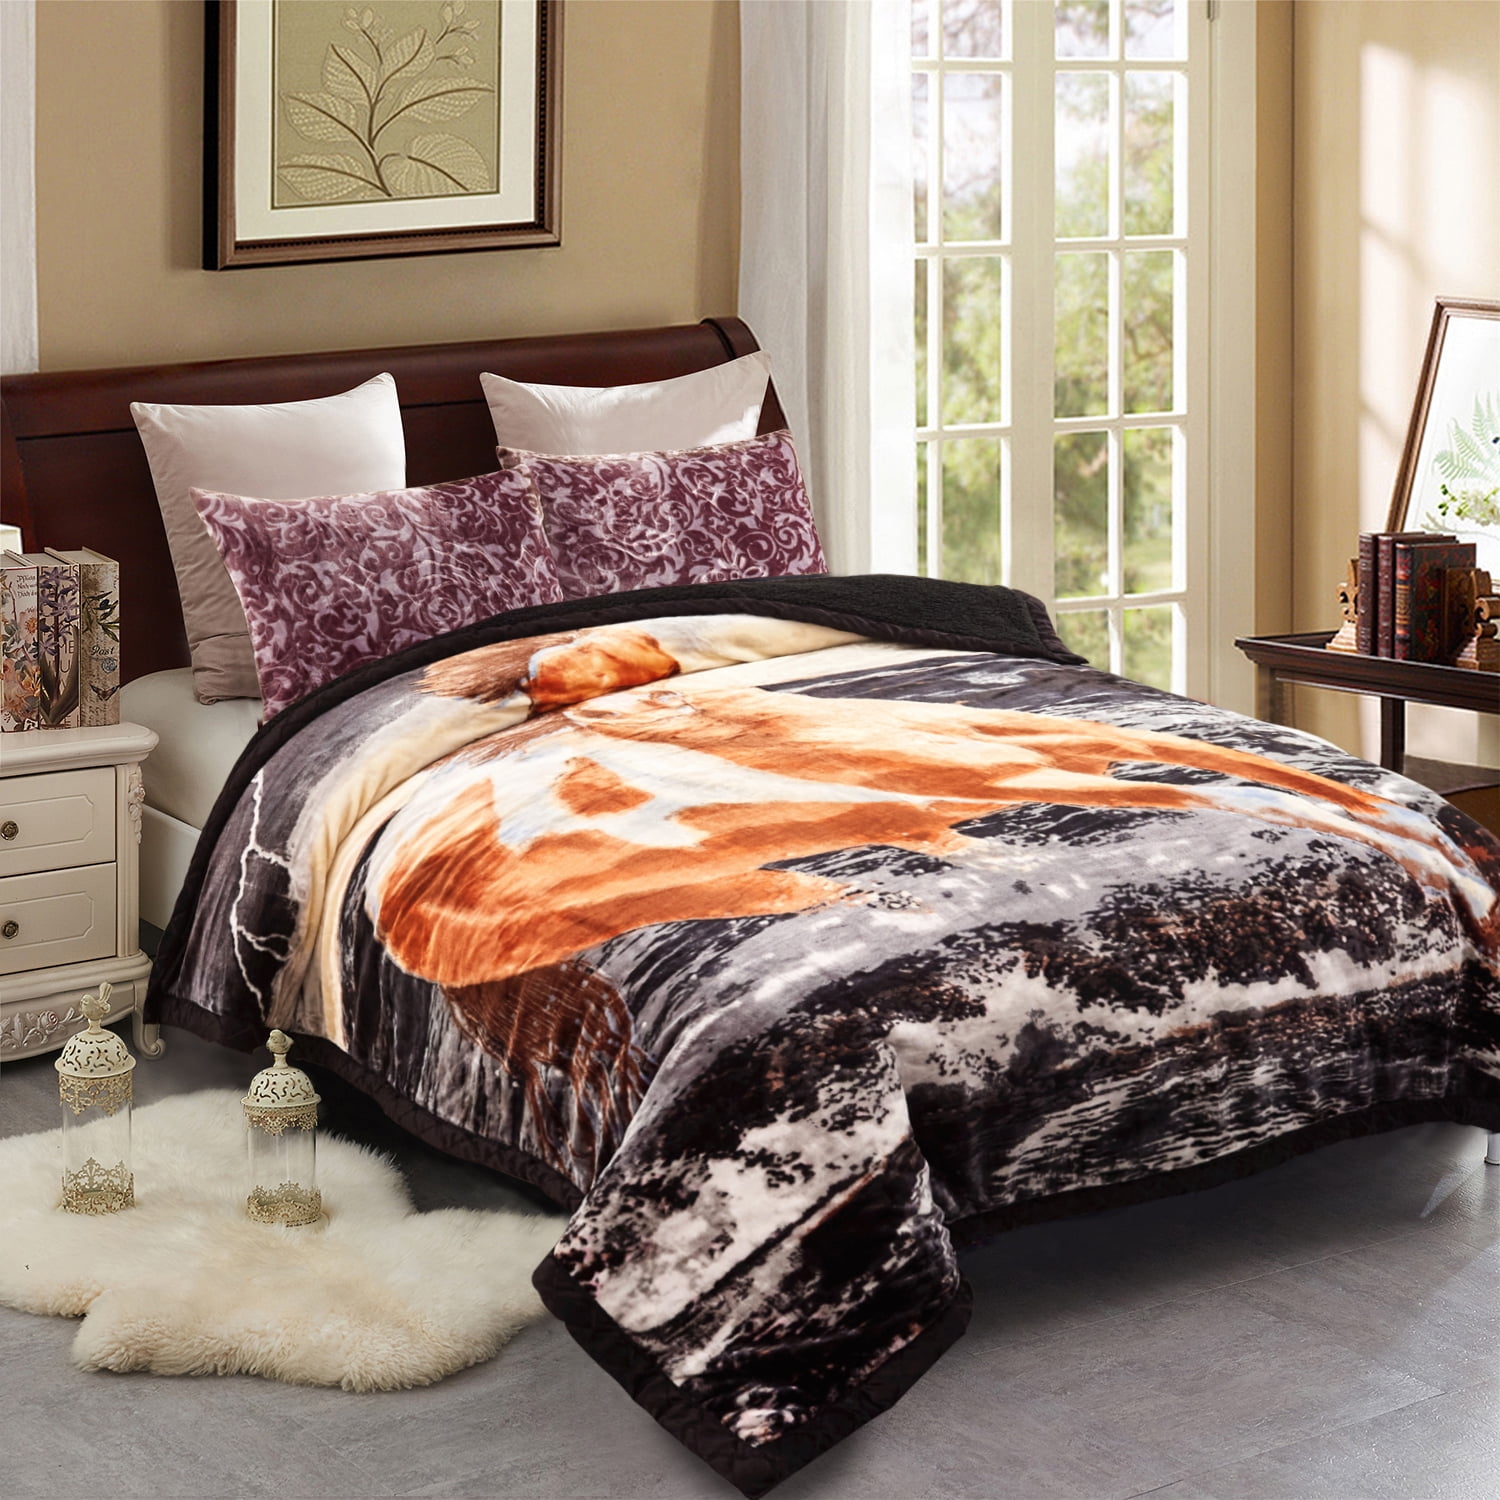 Tiger Mink Heavy Blanket Thick Warm Winter King Size Blanket 85x93 